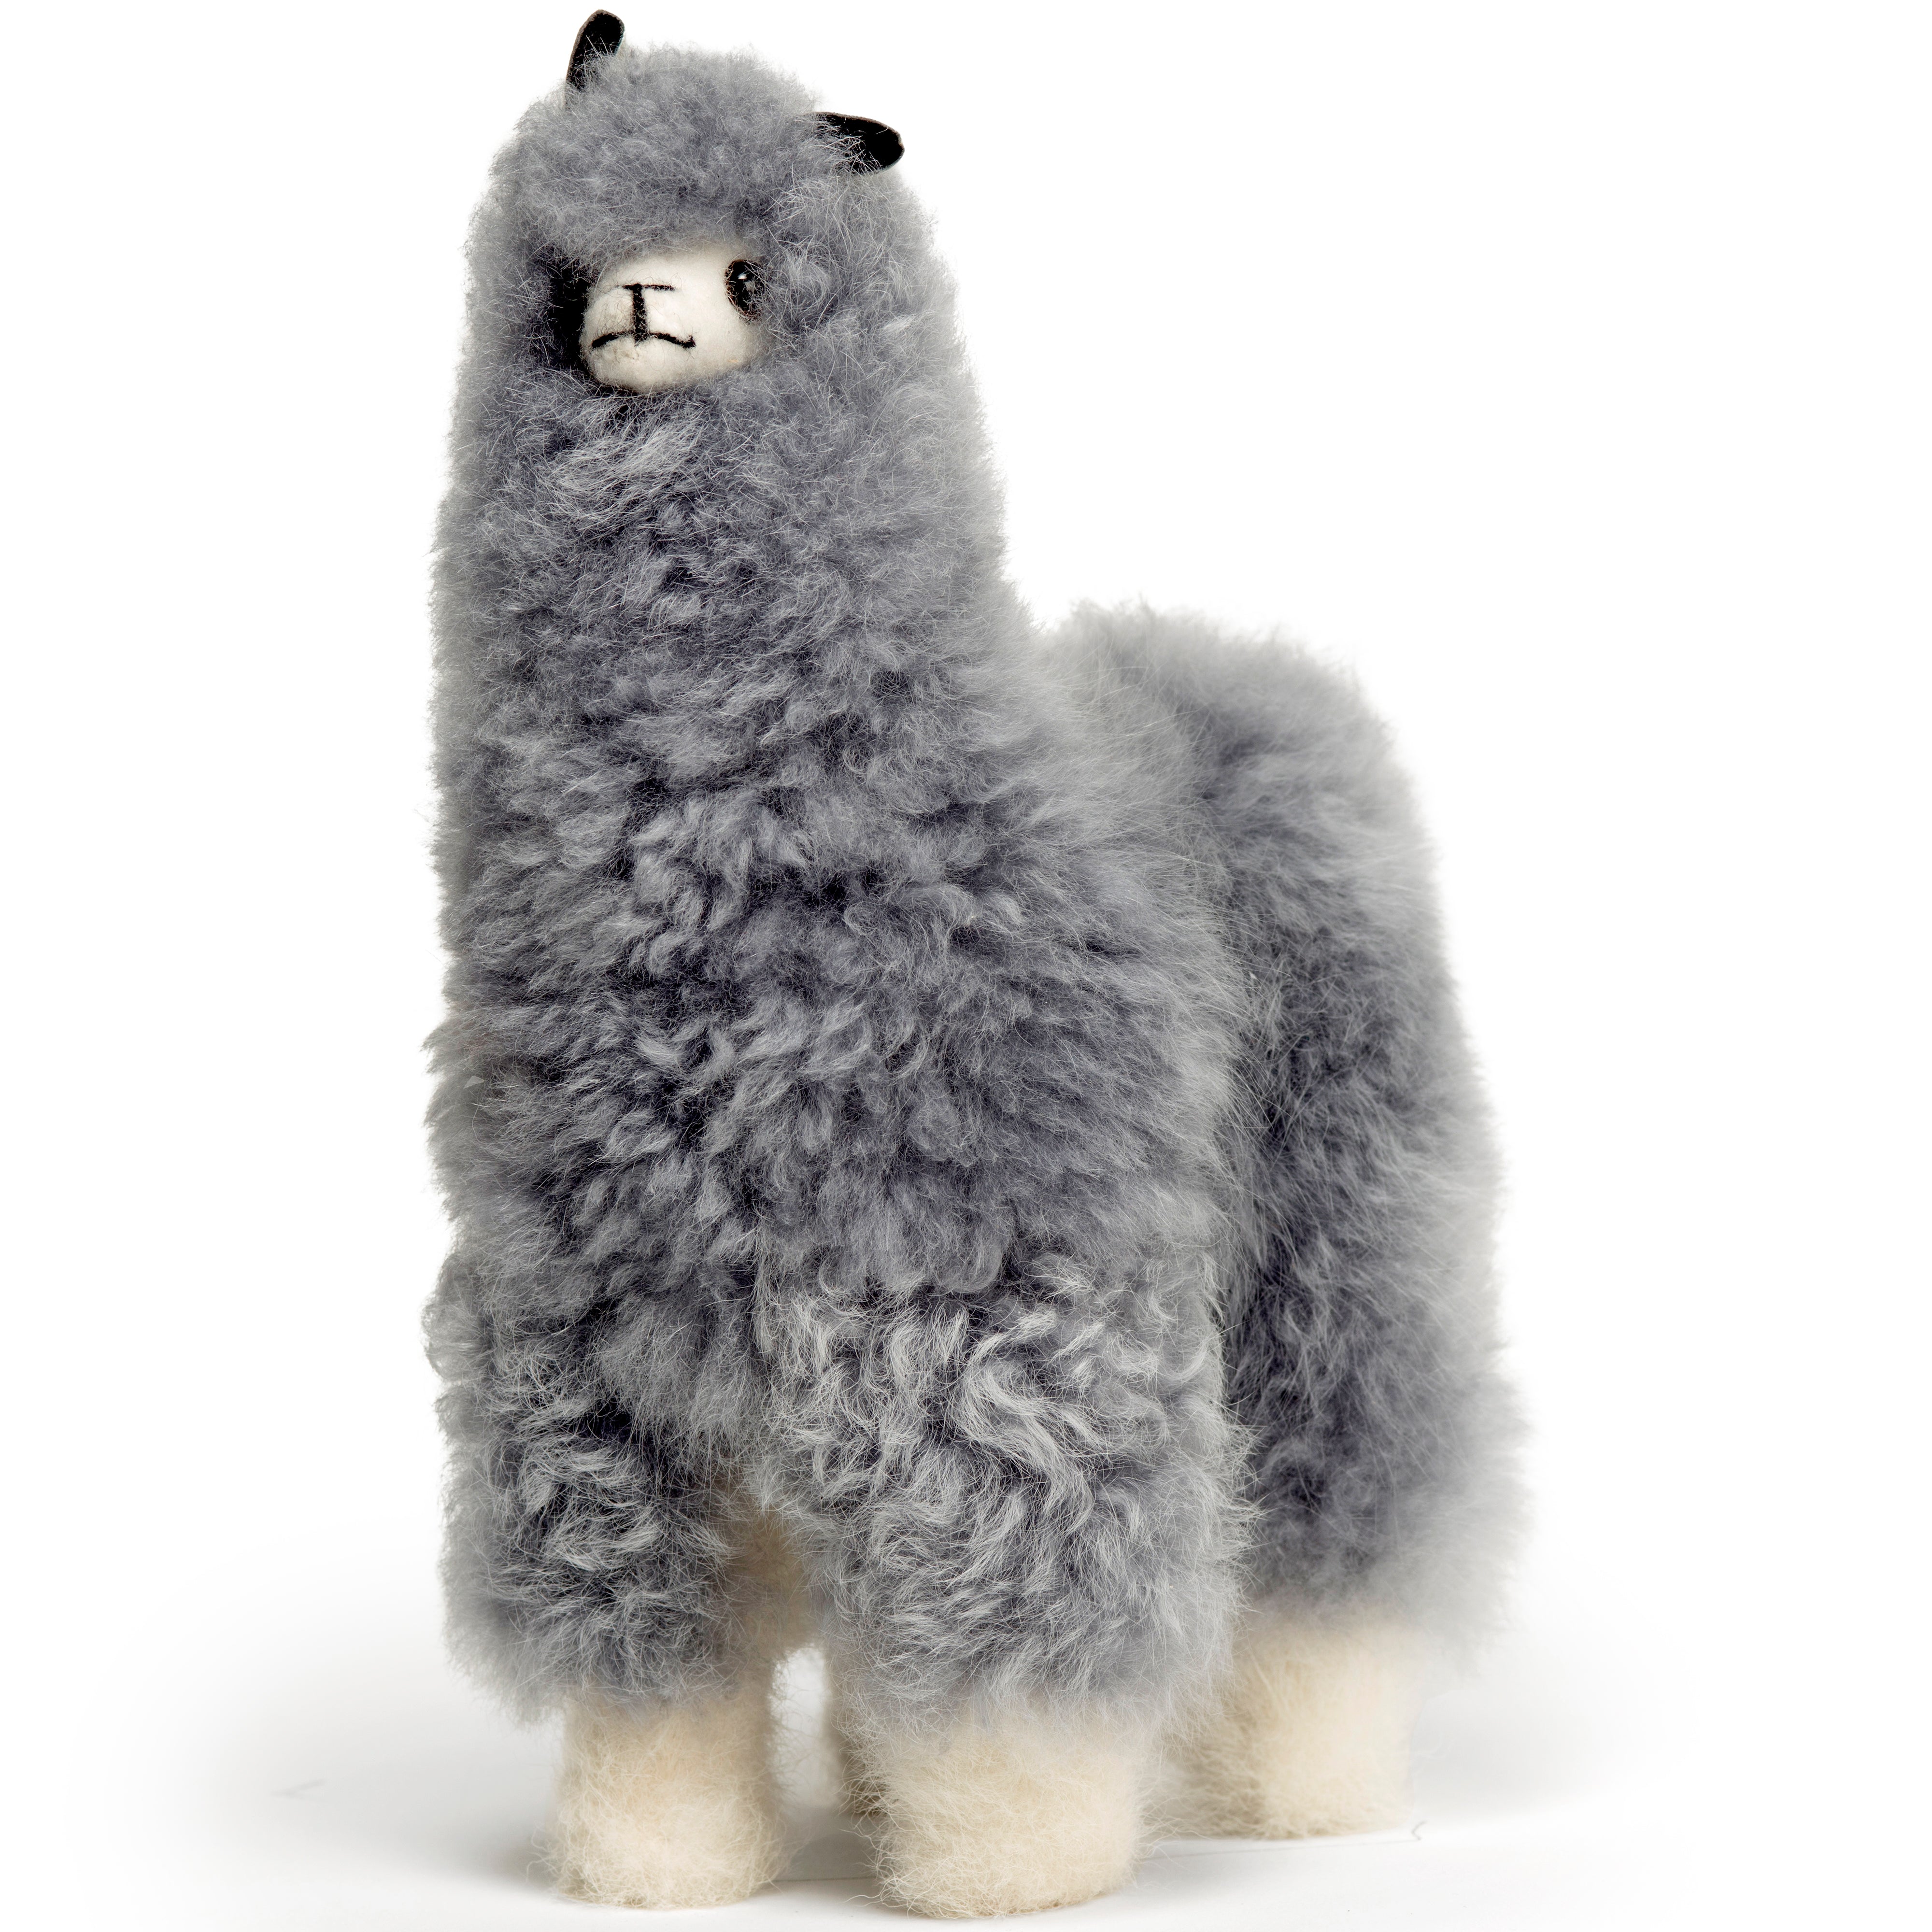 llama stuffed animal for baby